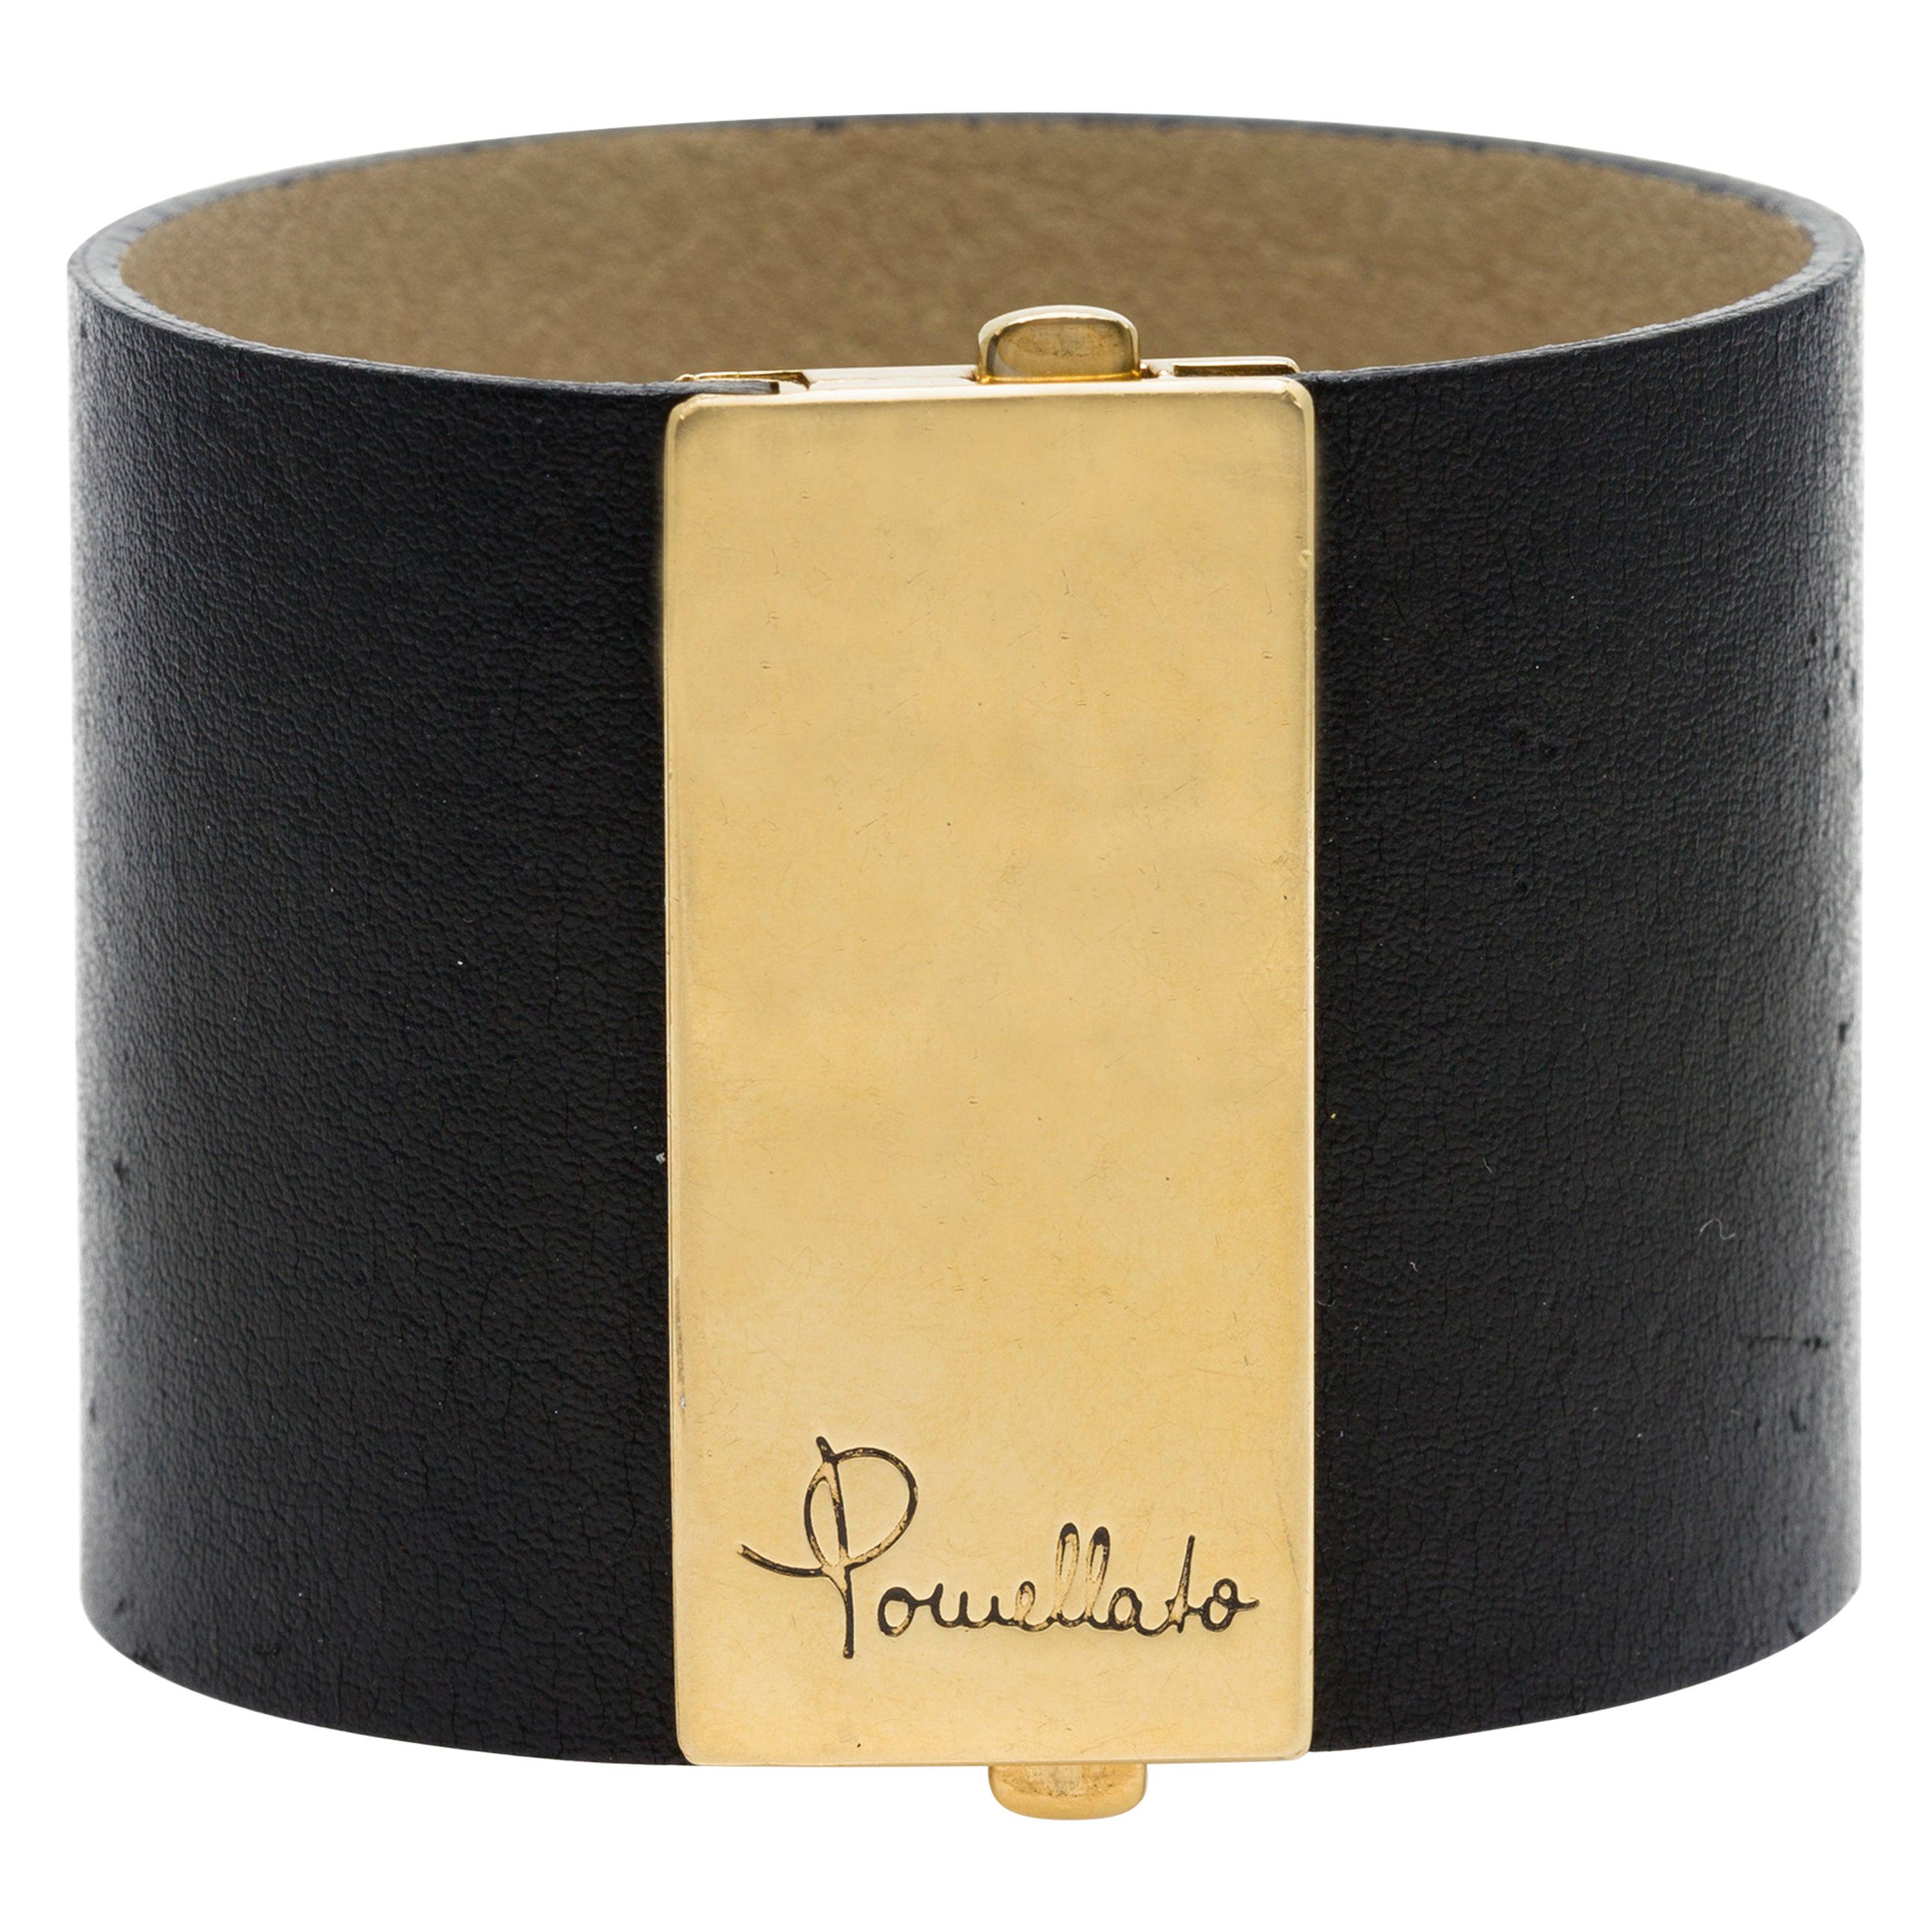 Signed Pomellato Leather Cuff Bracelet with Heavy 18 Karat Gold Buckle